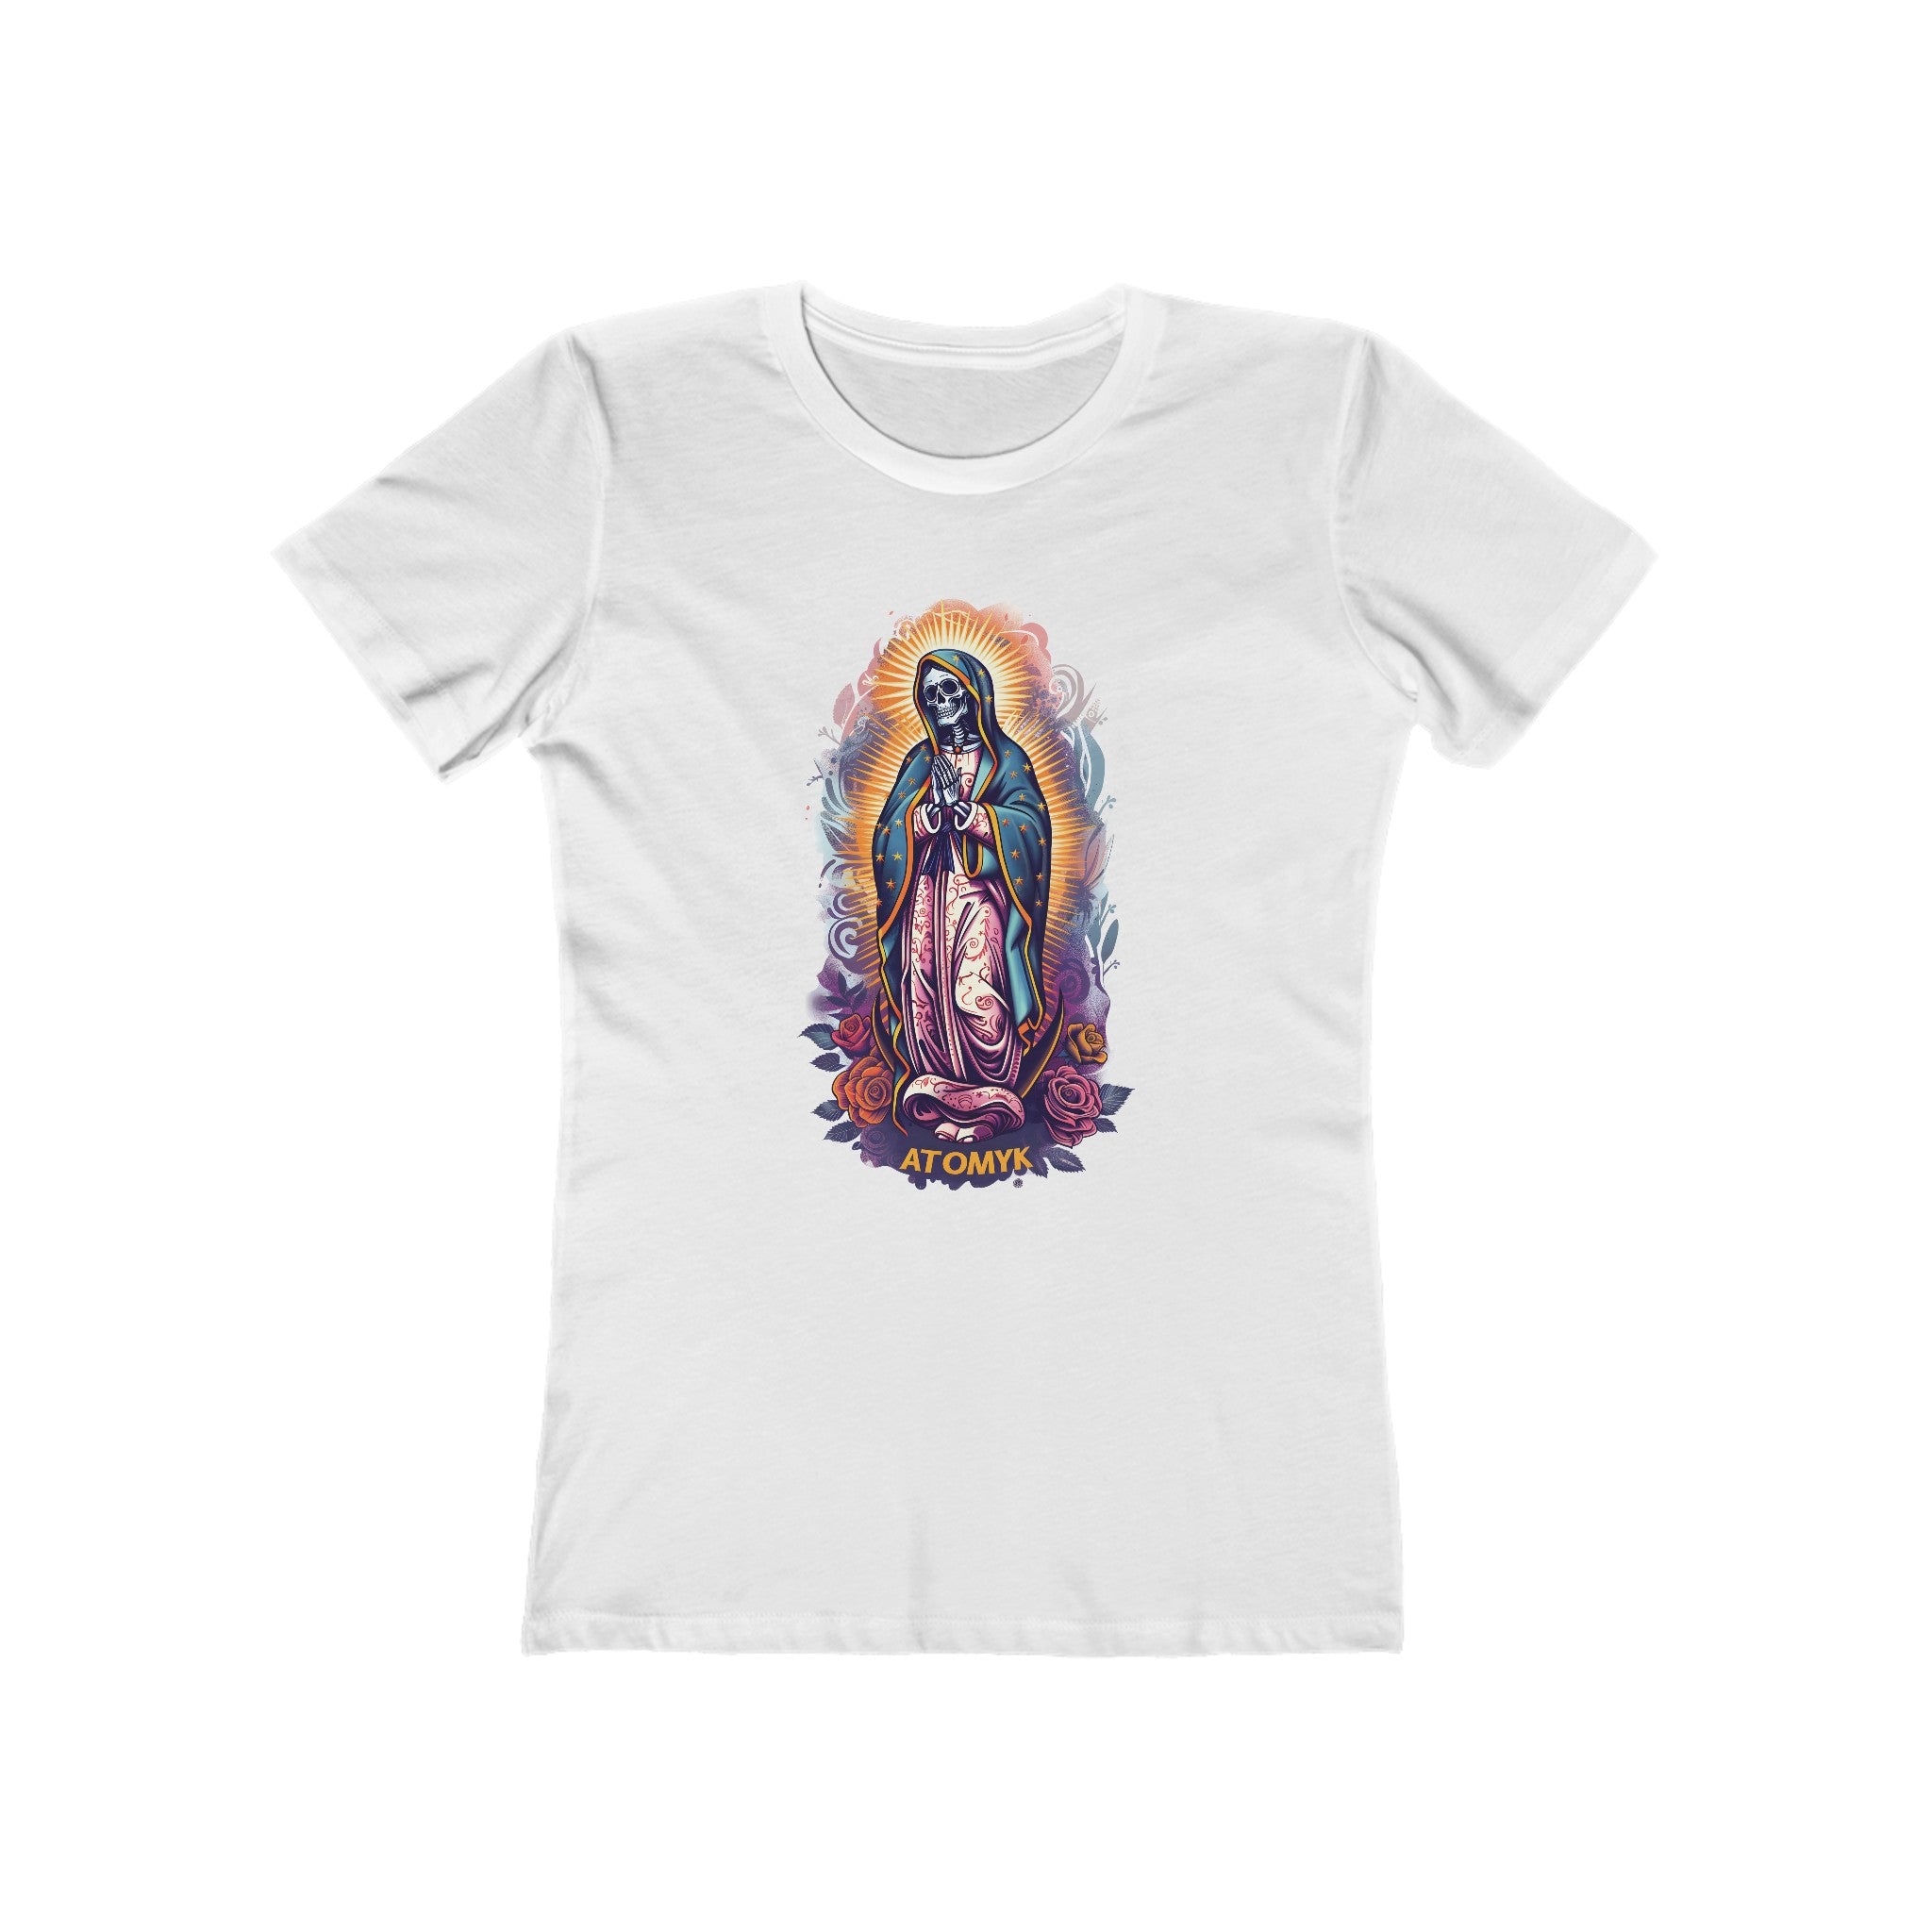 Our Lady Saint Womens L'Atomique Graphic Tee